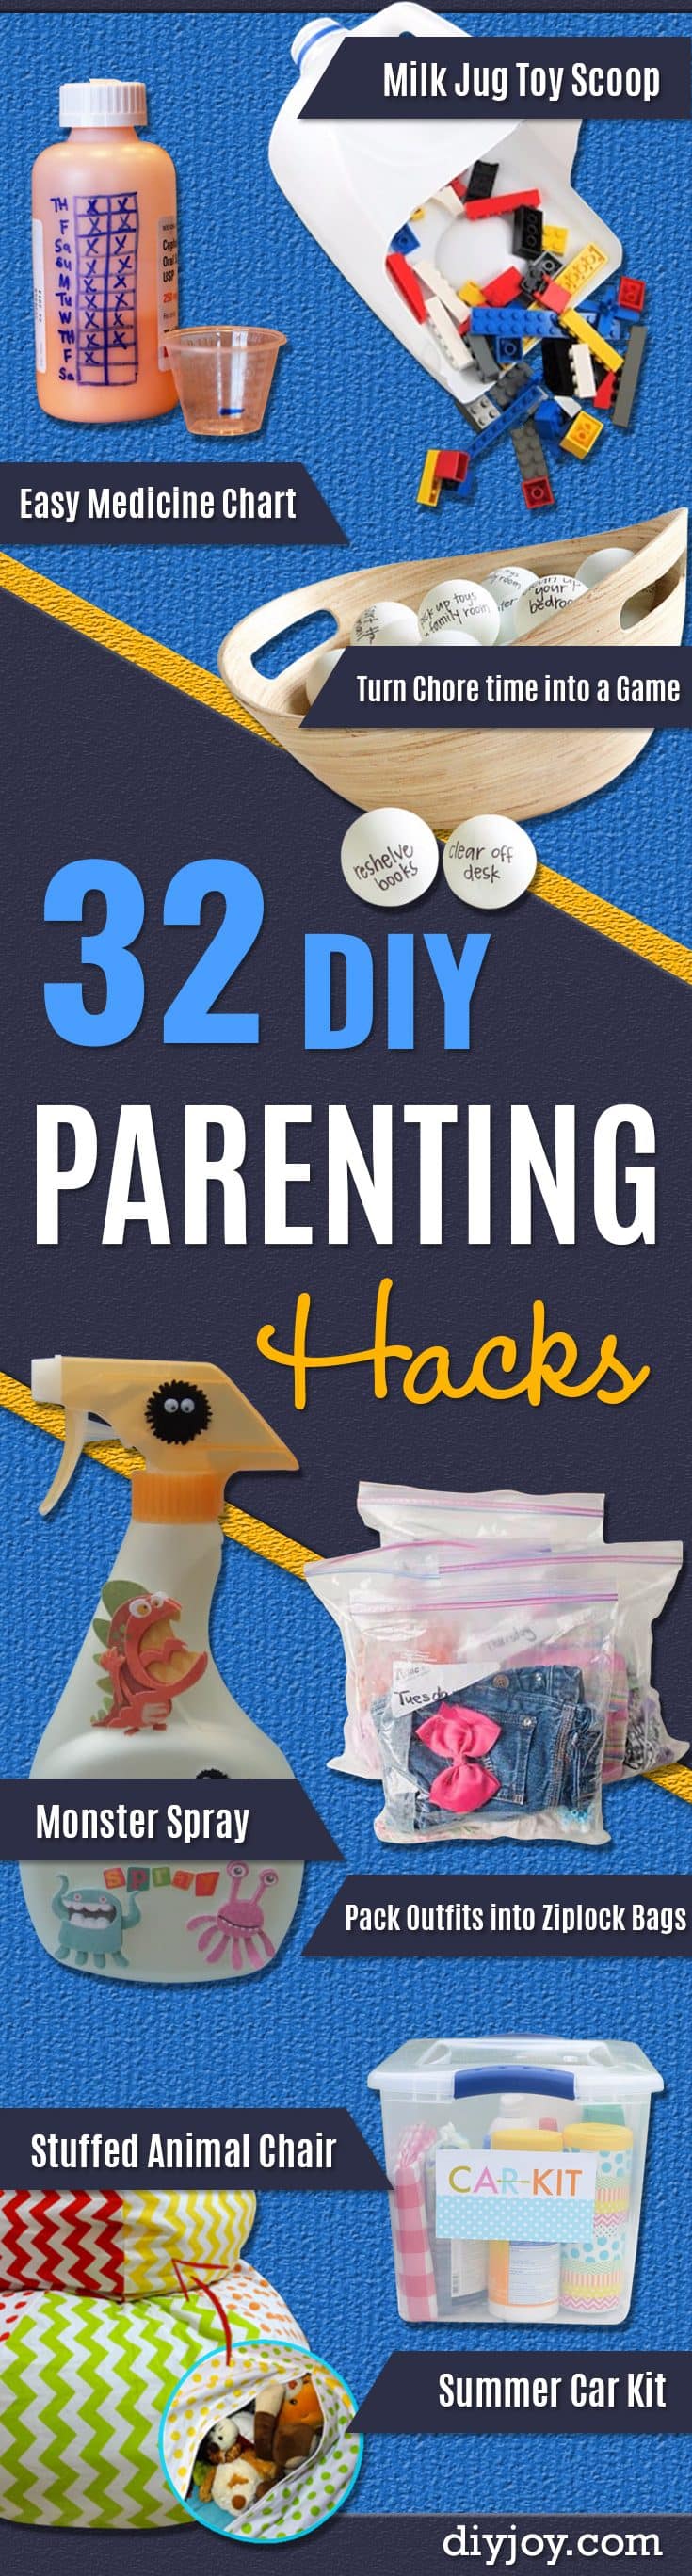 32 DIY Parenting Hacks - Brilliant Parenting Hacks, Tips And Tricks That Will Make Parenting Easier, Parenting Made Fun, Genius Parenting Hacks Every Parent Should Know, Best Parenting Hacks, Extremely Clever Parenting Hacks